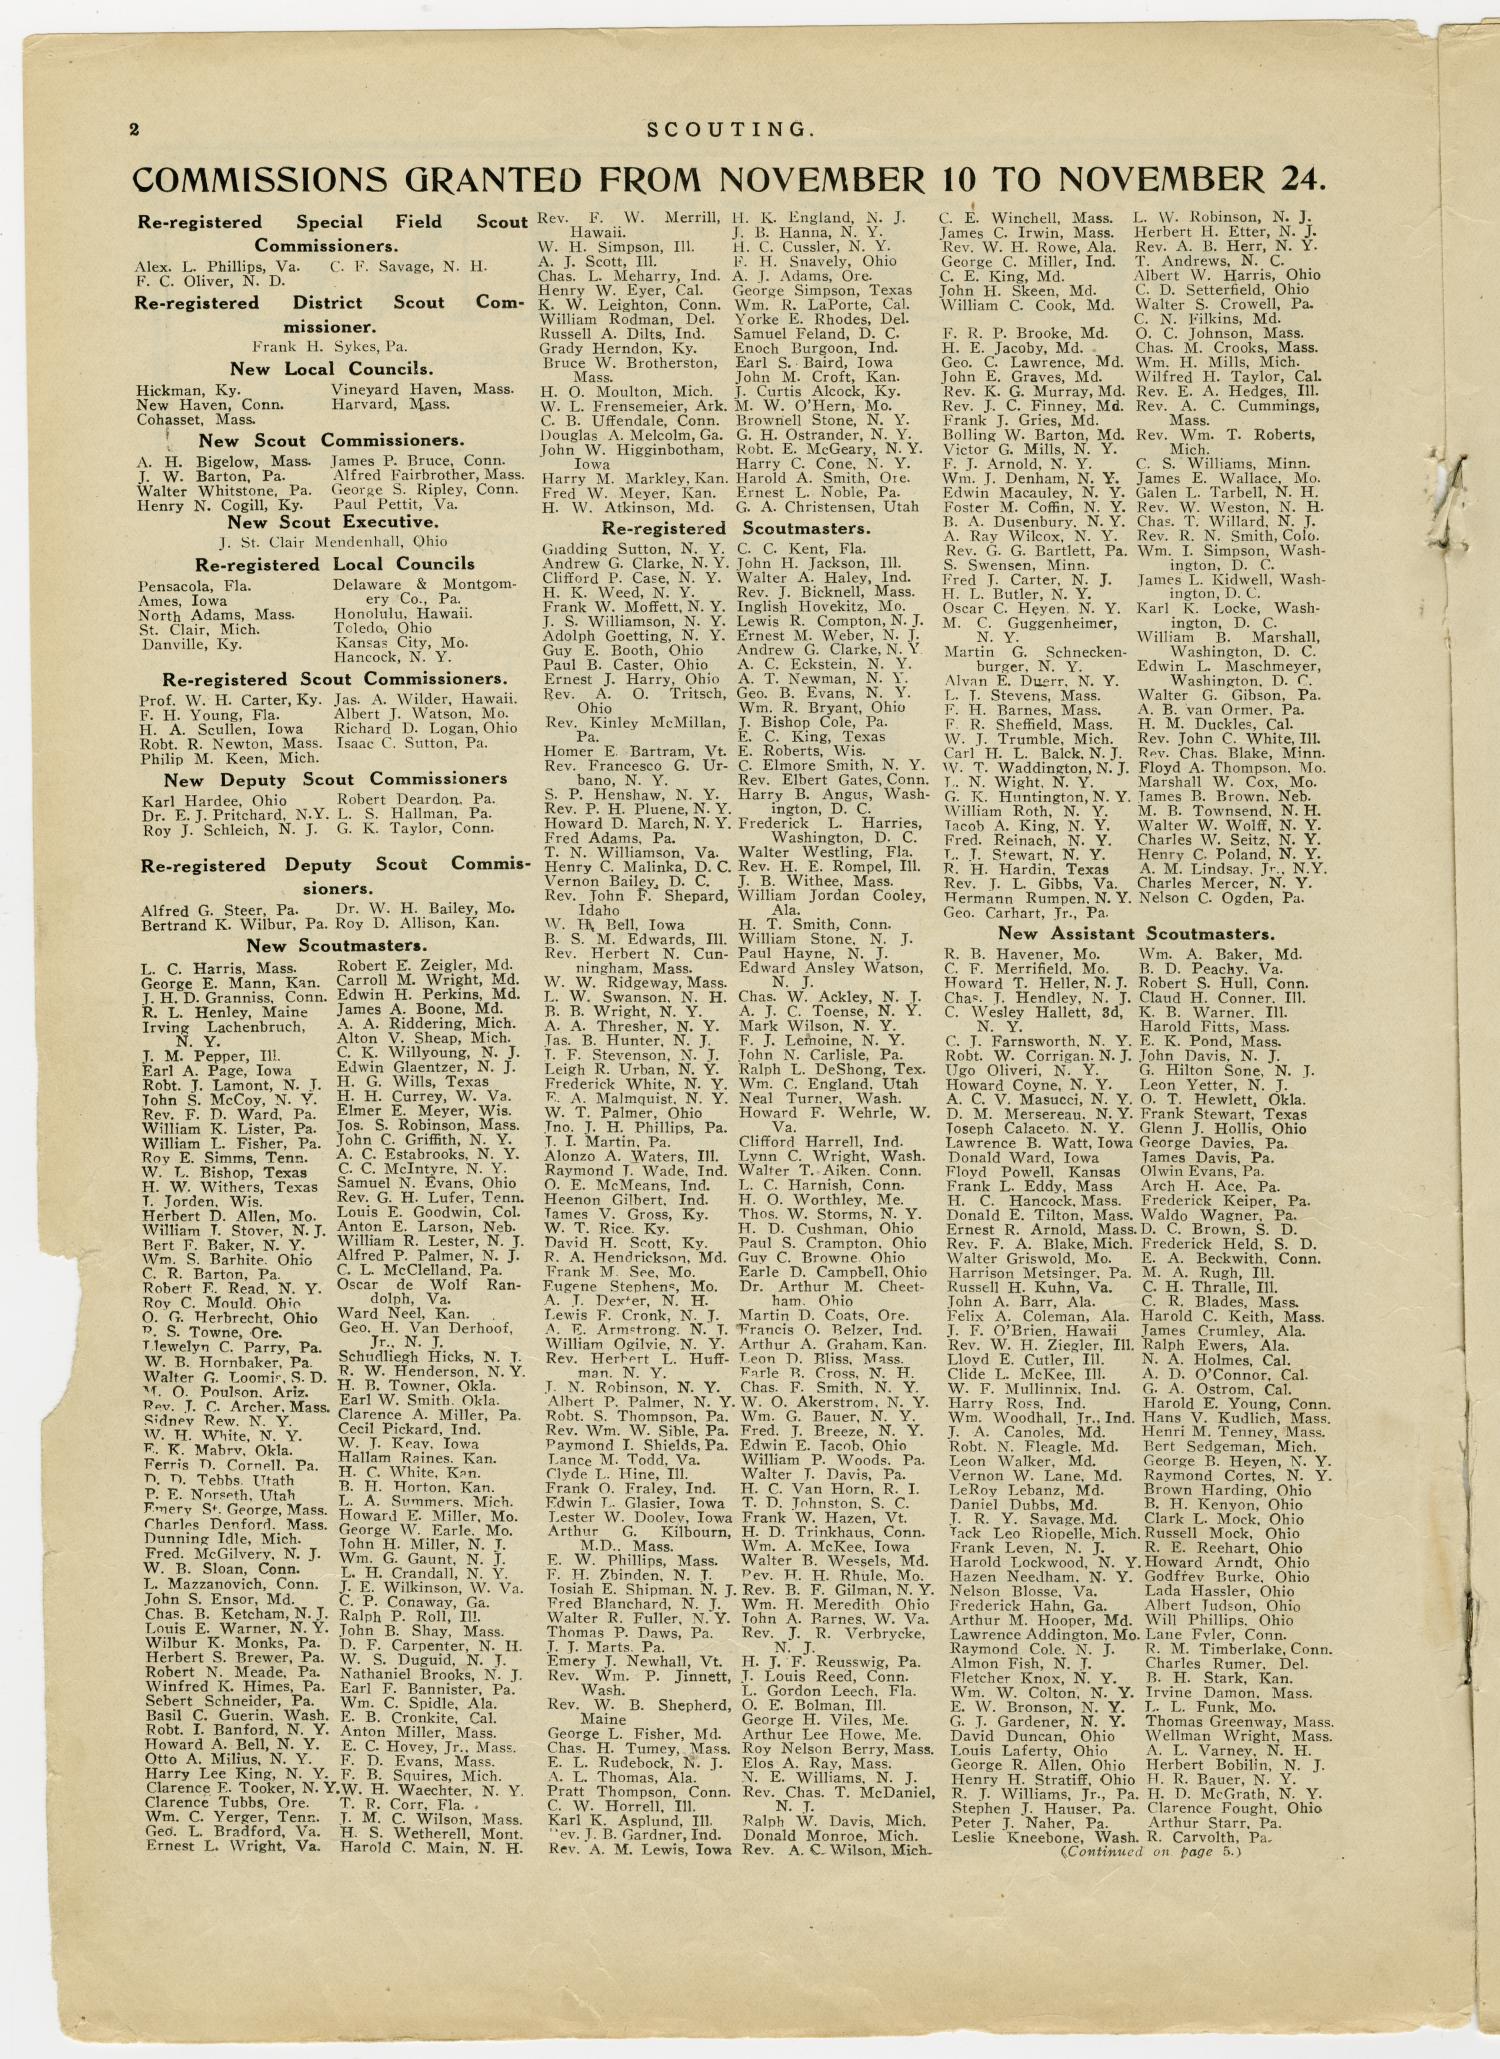 Scouting, Volume 2, Number 15, December 1, 1914
                                                
                                                    2
                                                